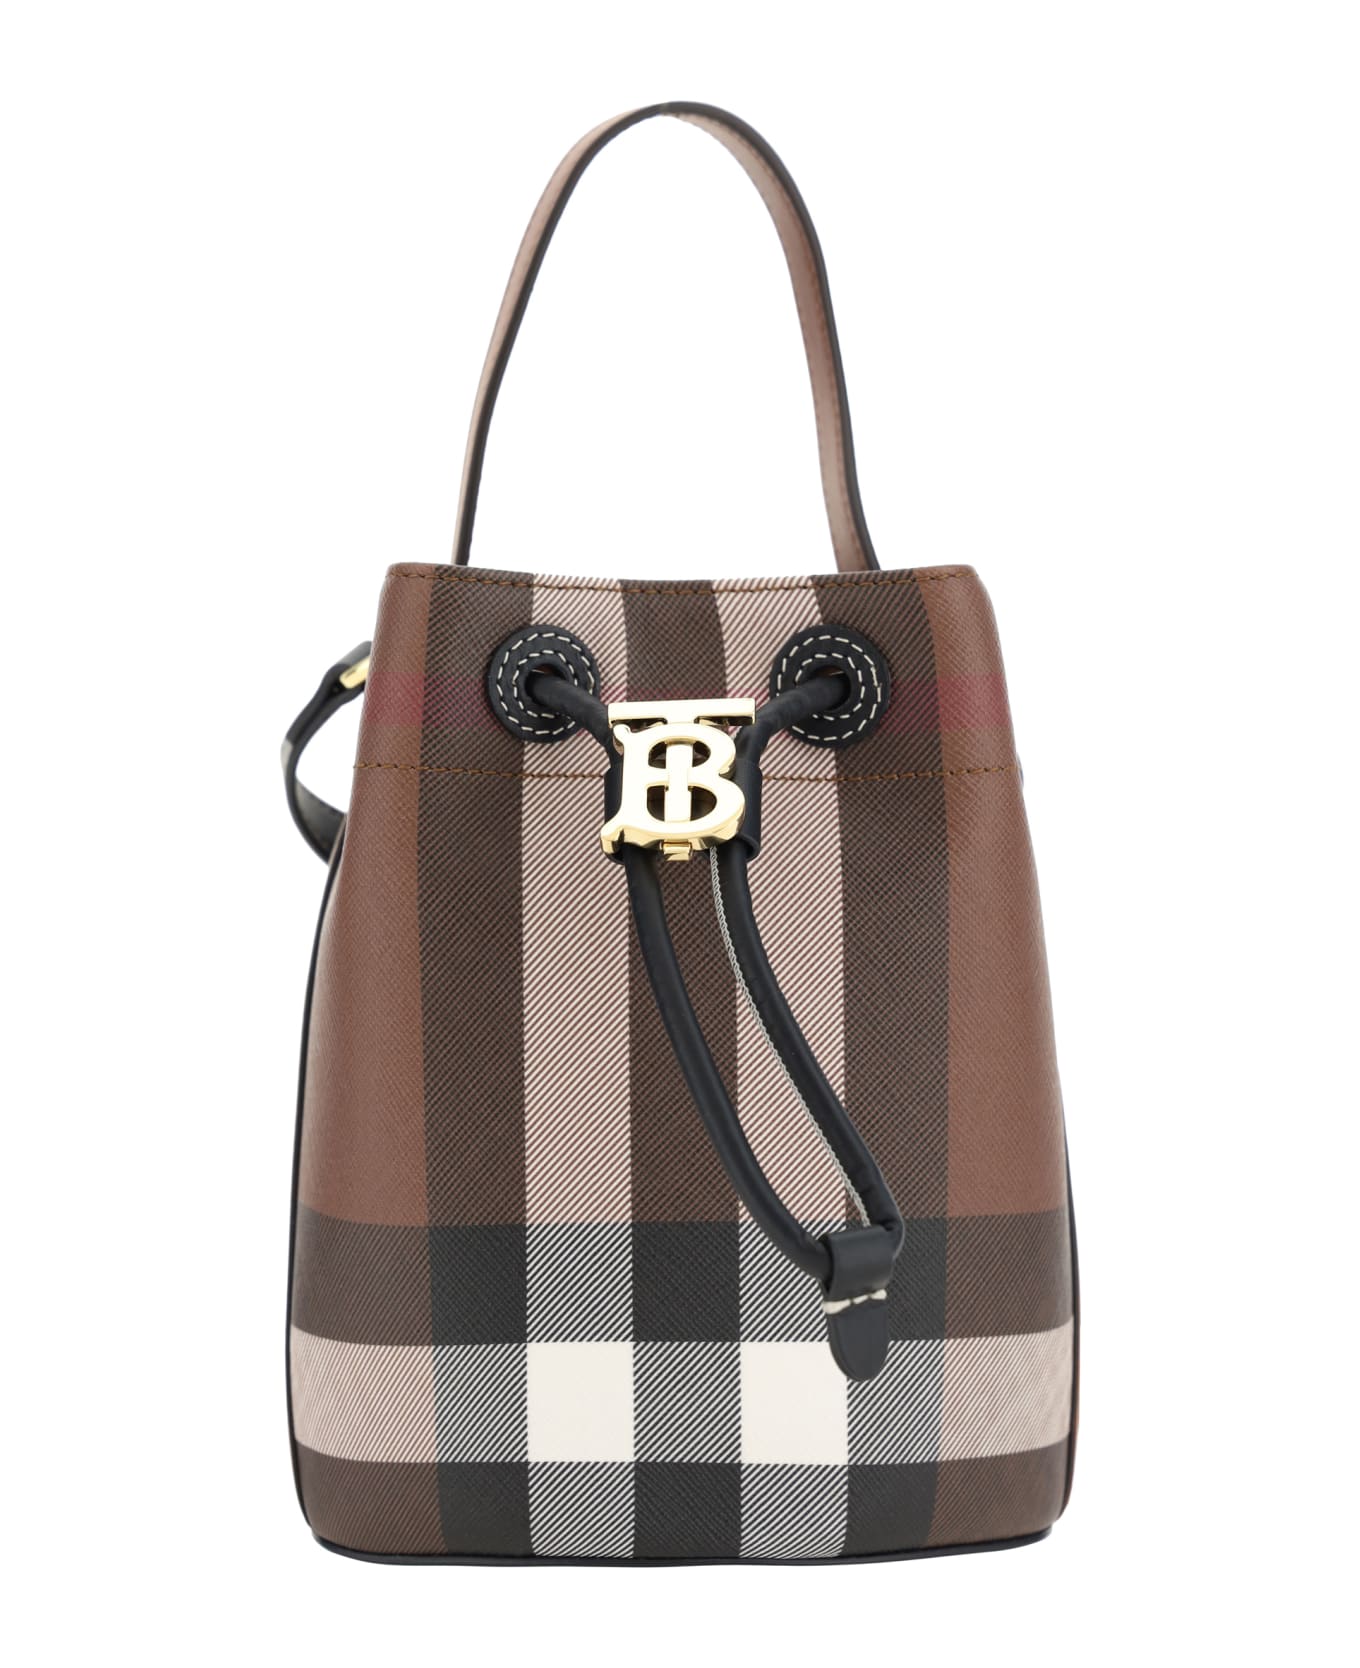 Burberry Bucket Bag - Dark Birch Brown